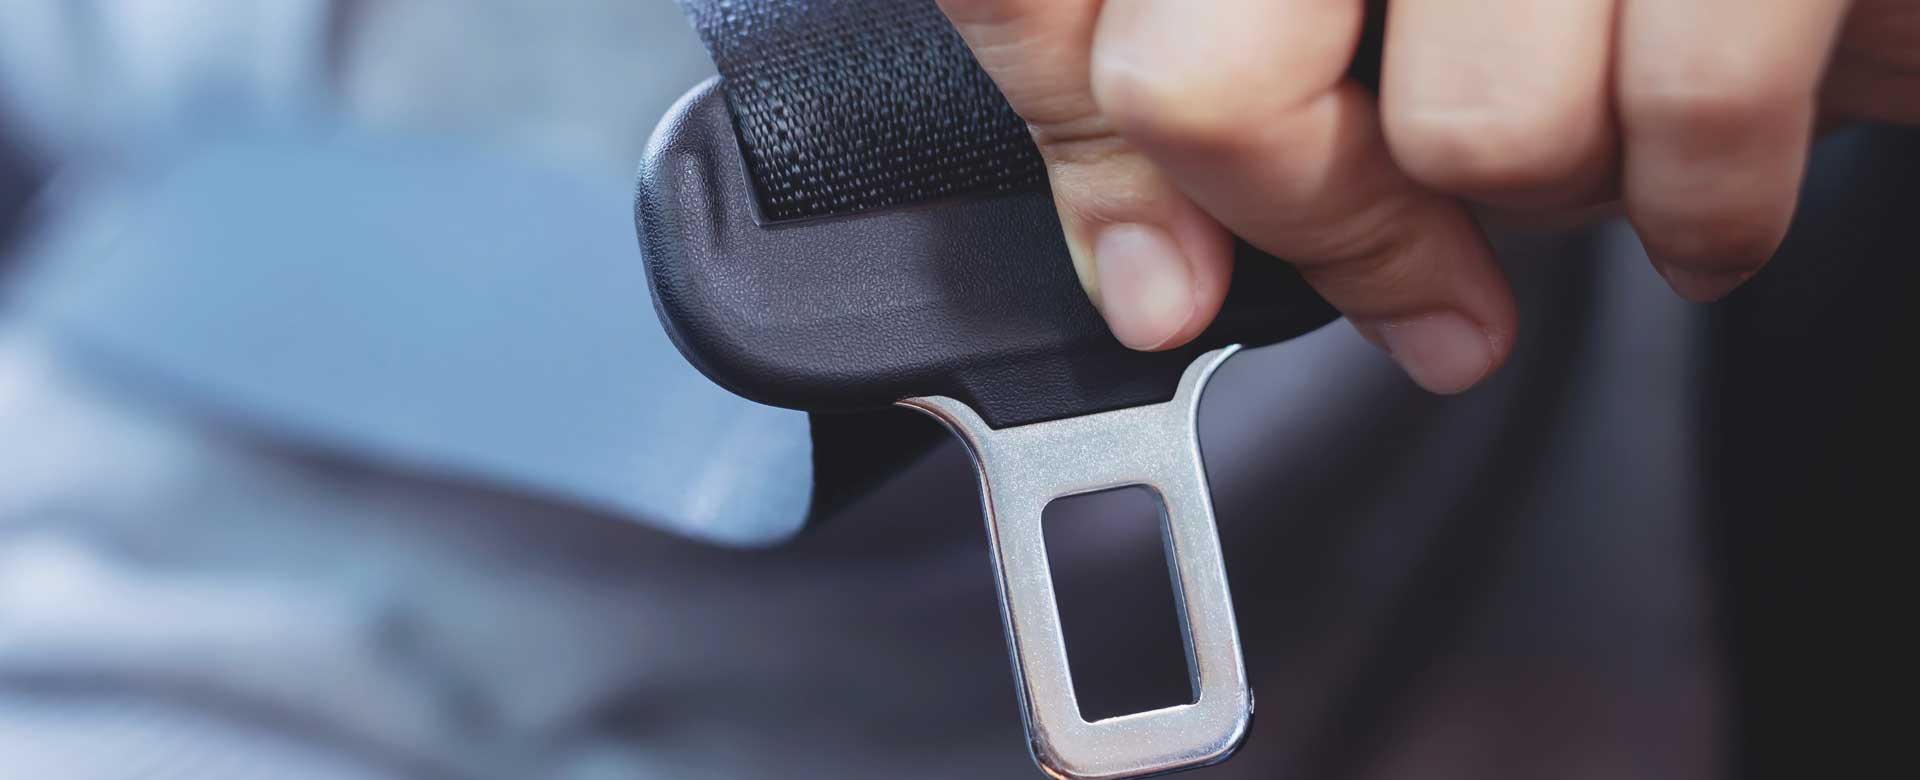 Cintura di sicurezza di un'auto